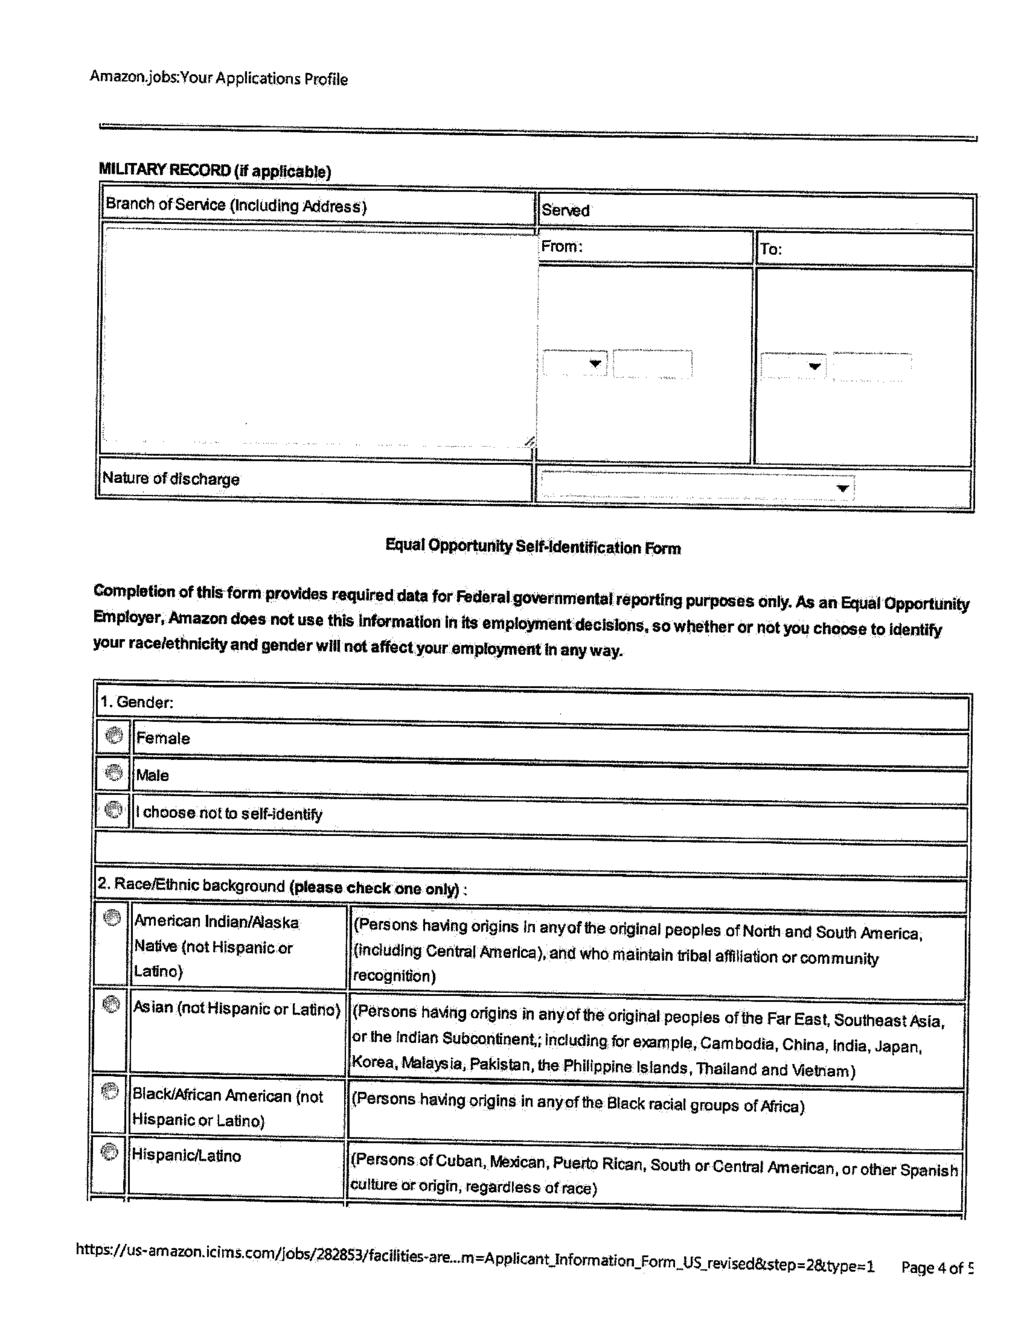 Case 8:15-cv-02456-RAL-AAS Document